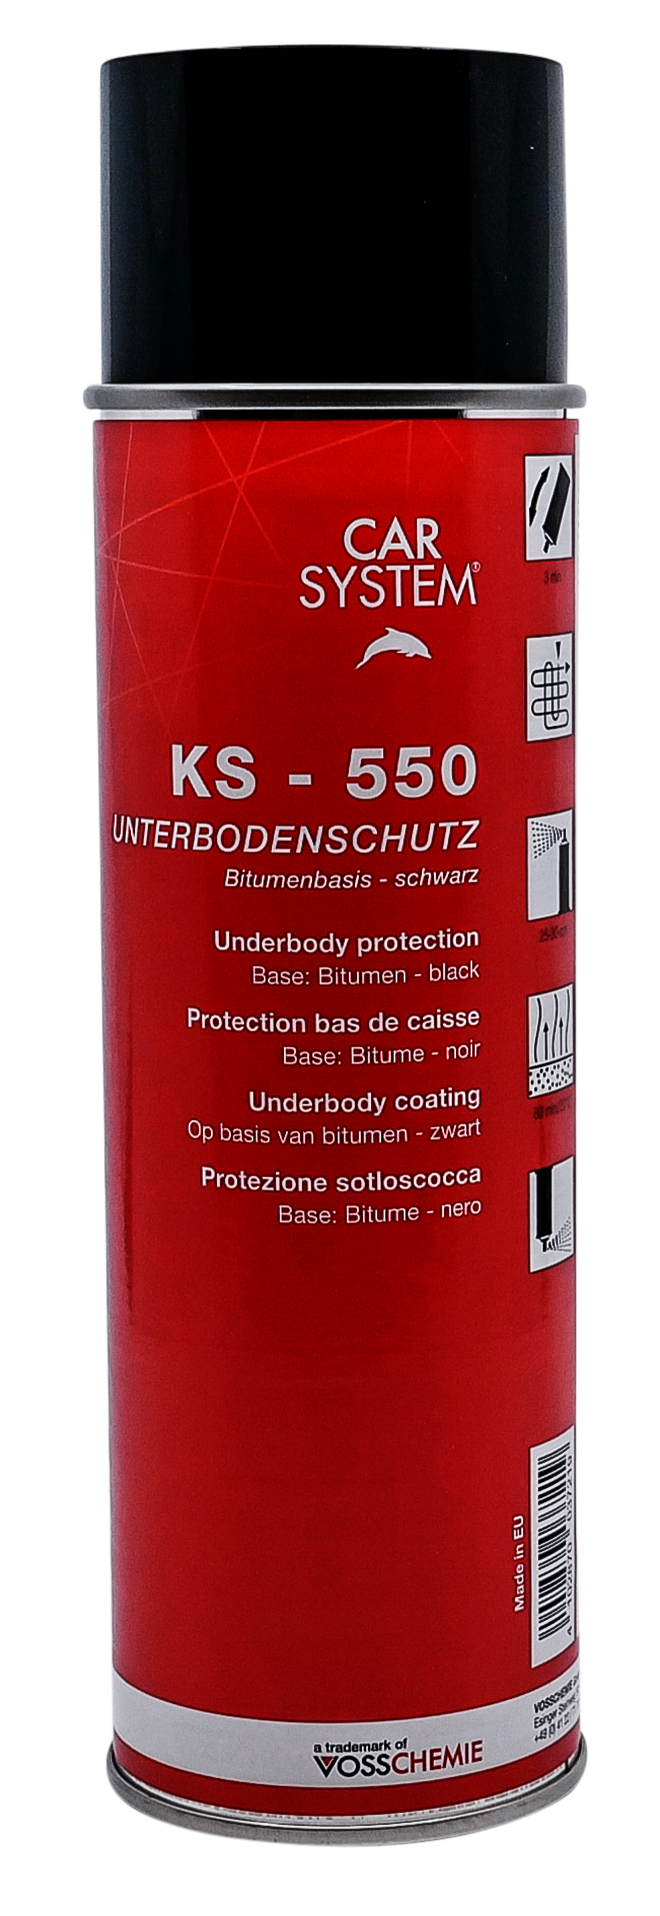 KS-550 Unterbodenschutz Bitumen - CARSYSTEM